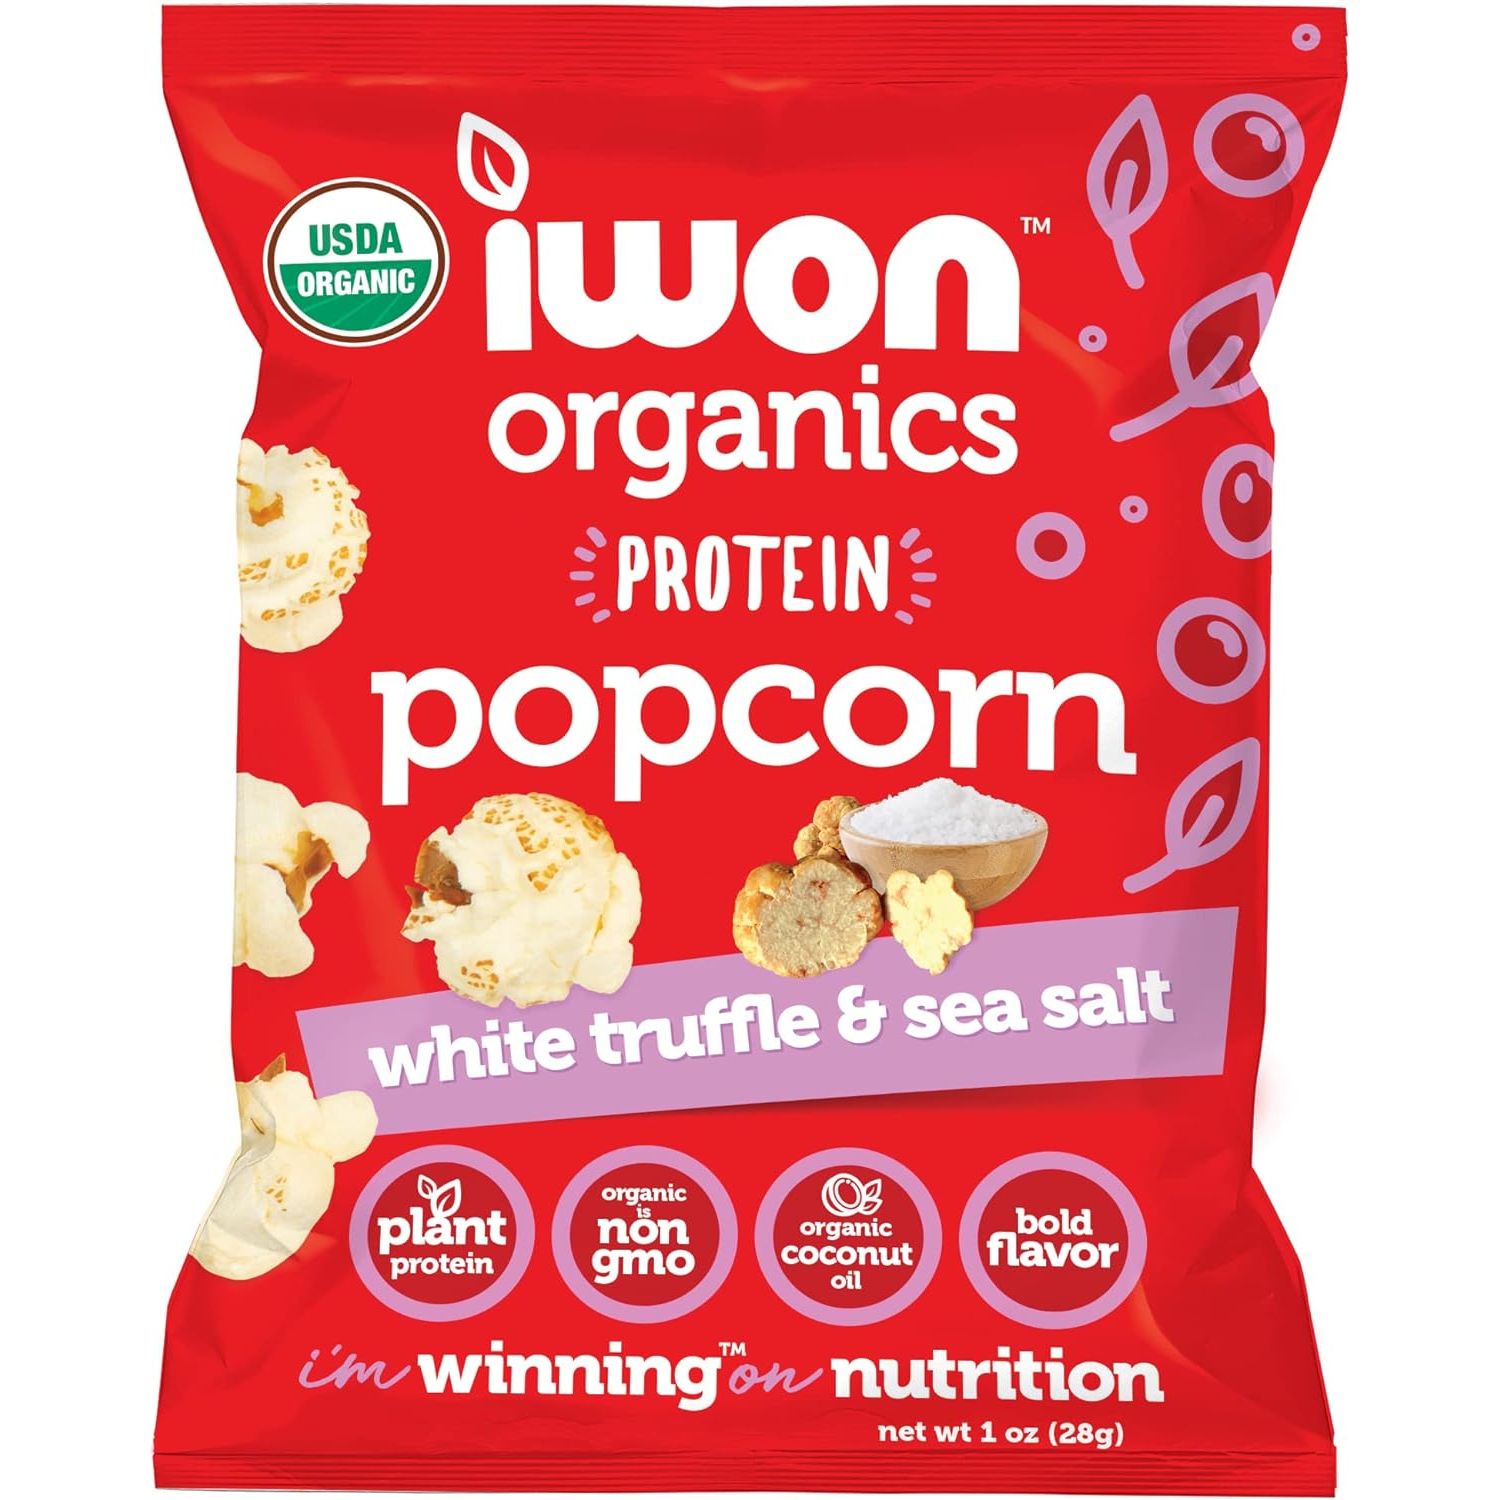 IWON Organics Protein Popcorn (1 bag) iwon-organics-protein-popcorn-1-bag Protein Snacks White Truffle & Sea Salt IWON Organics